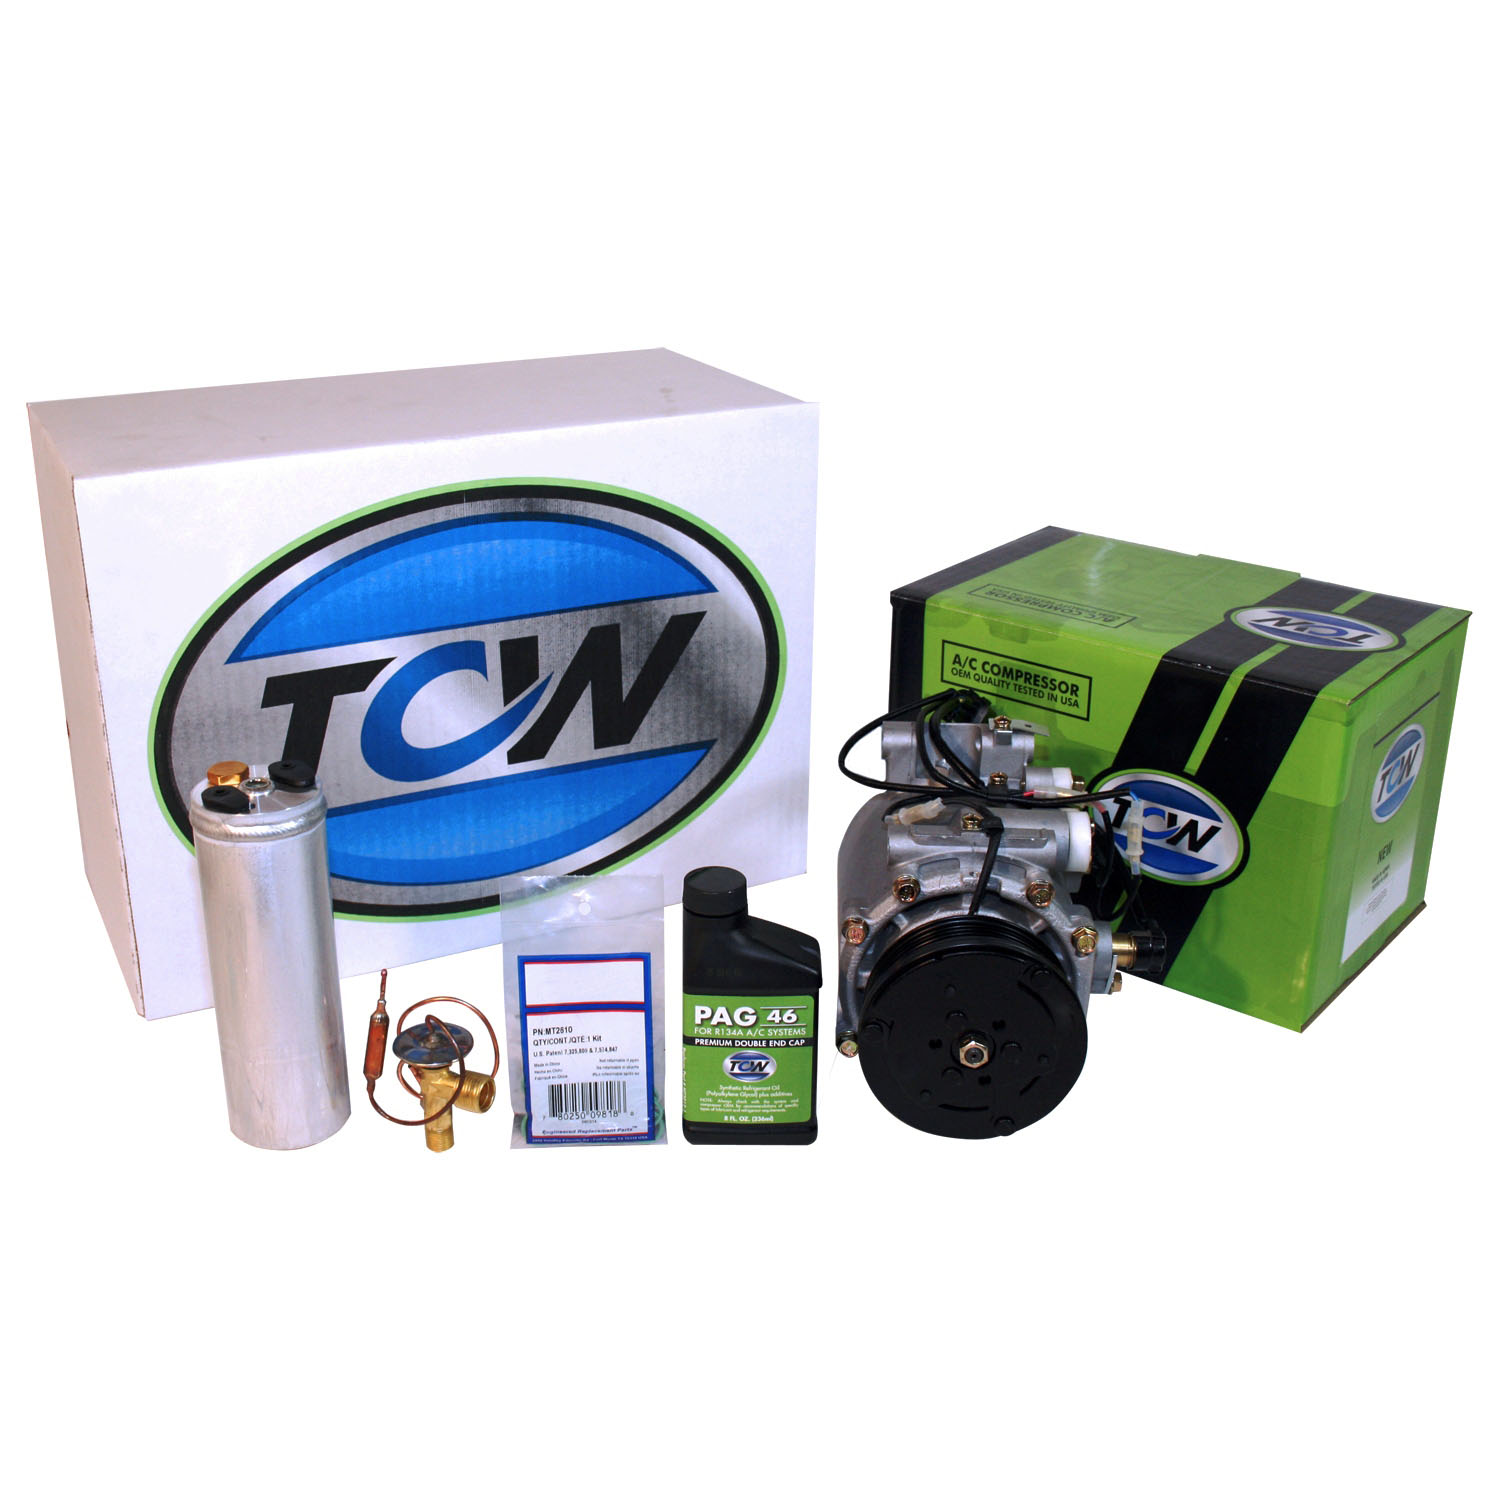 TCW Vehicle A/C Kit K1000216N New Product Image field_60b6a13a6e67c